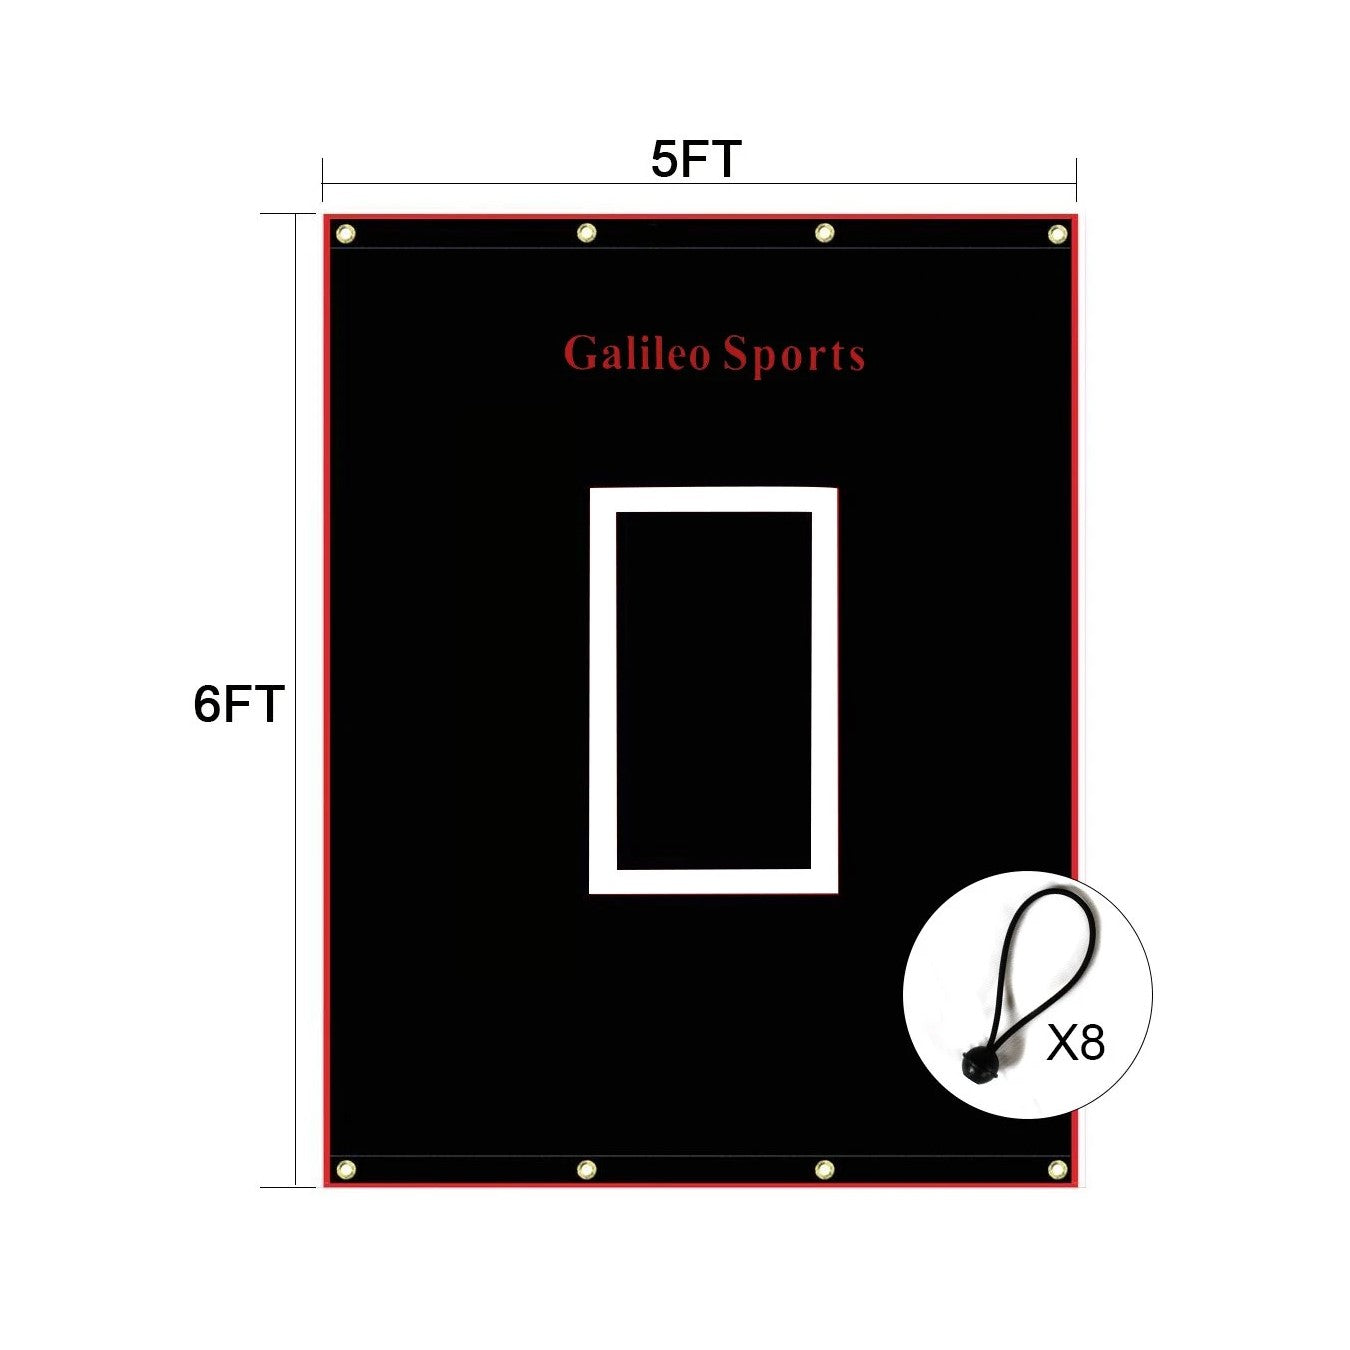 5X6 Galileo Softball Backstop /Viny Backstop Pitching Target